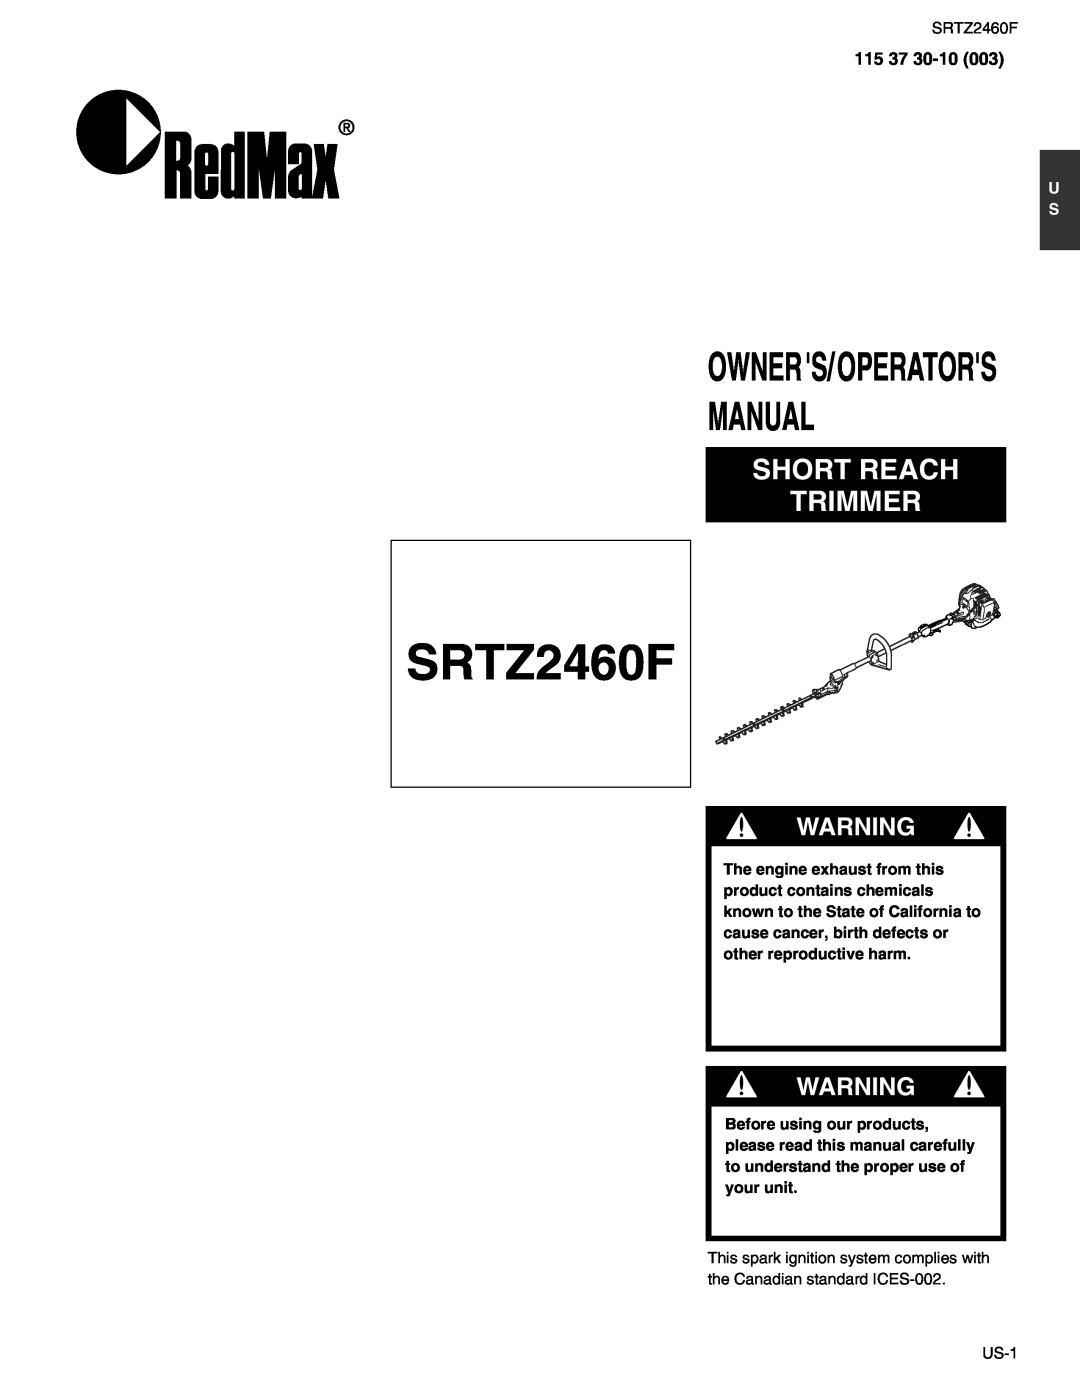 RedMax SRTZ2460F manual Short Reach Trimmer, Manual, Owners/Operators, 115 